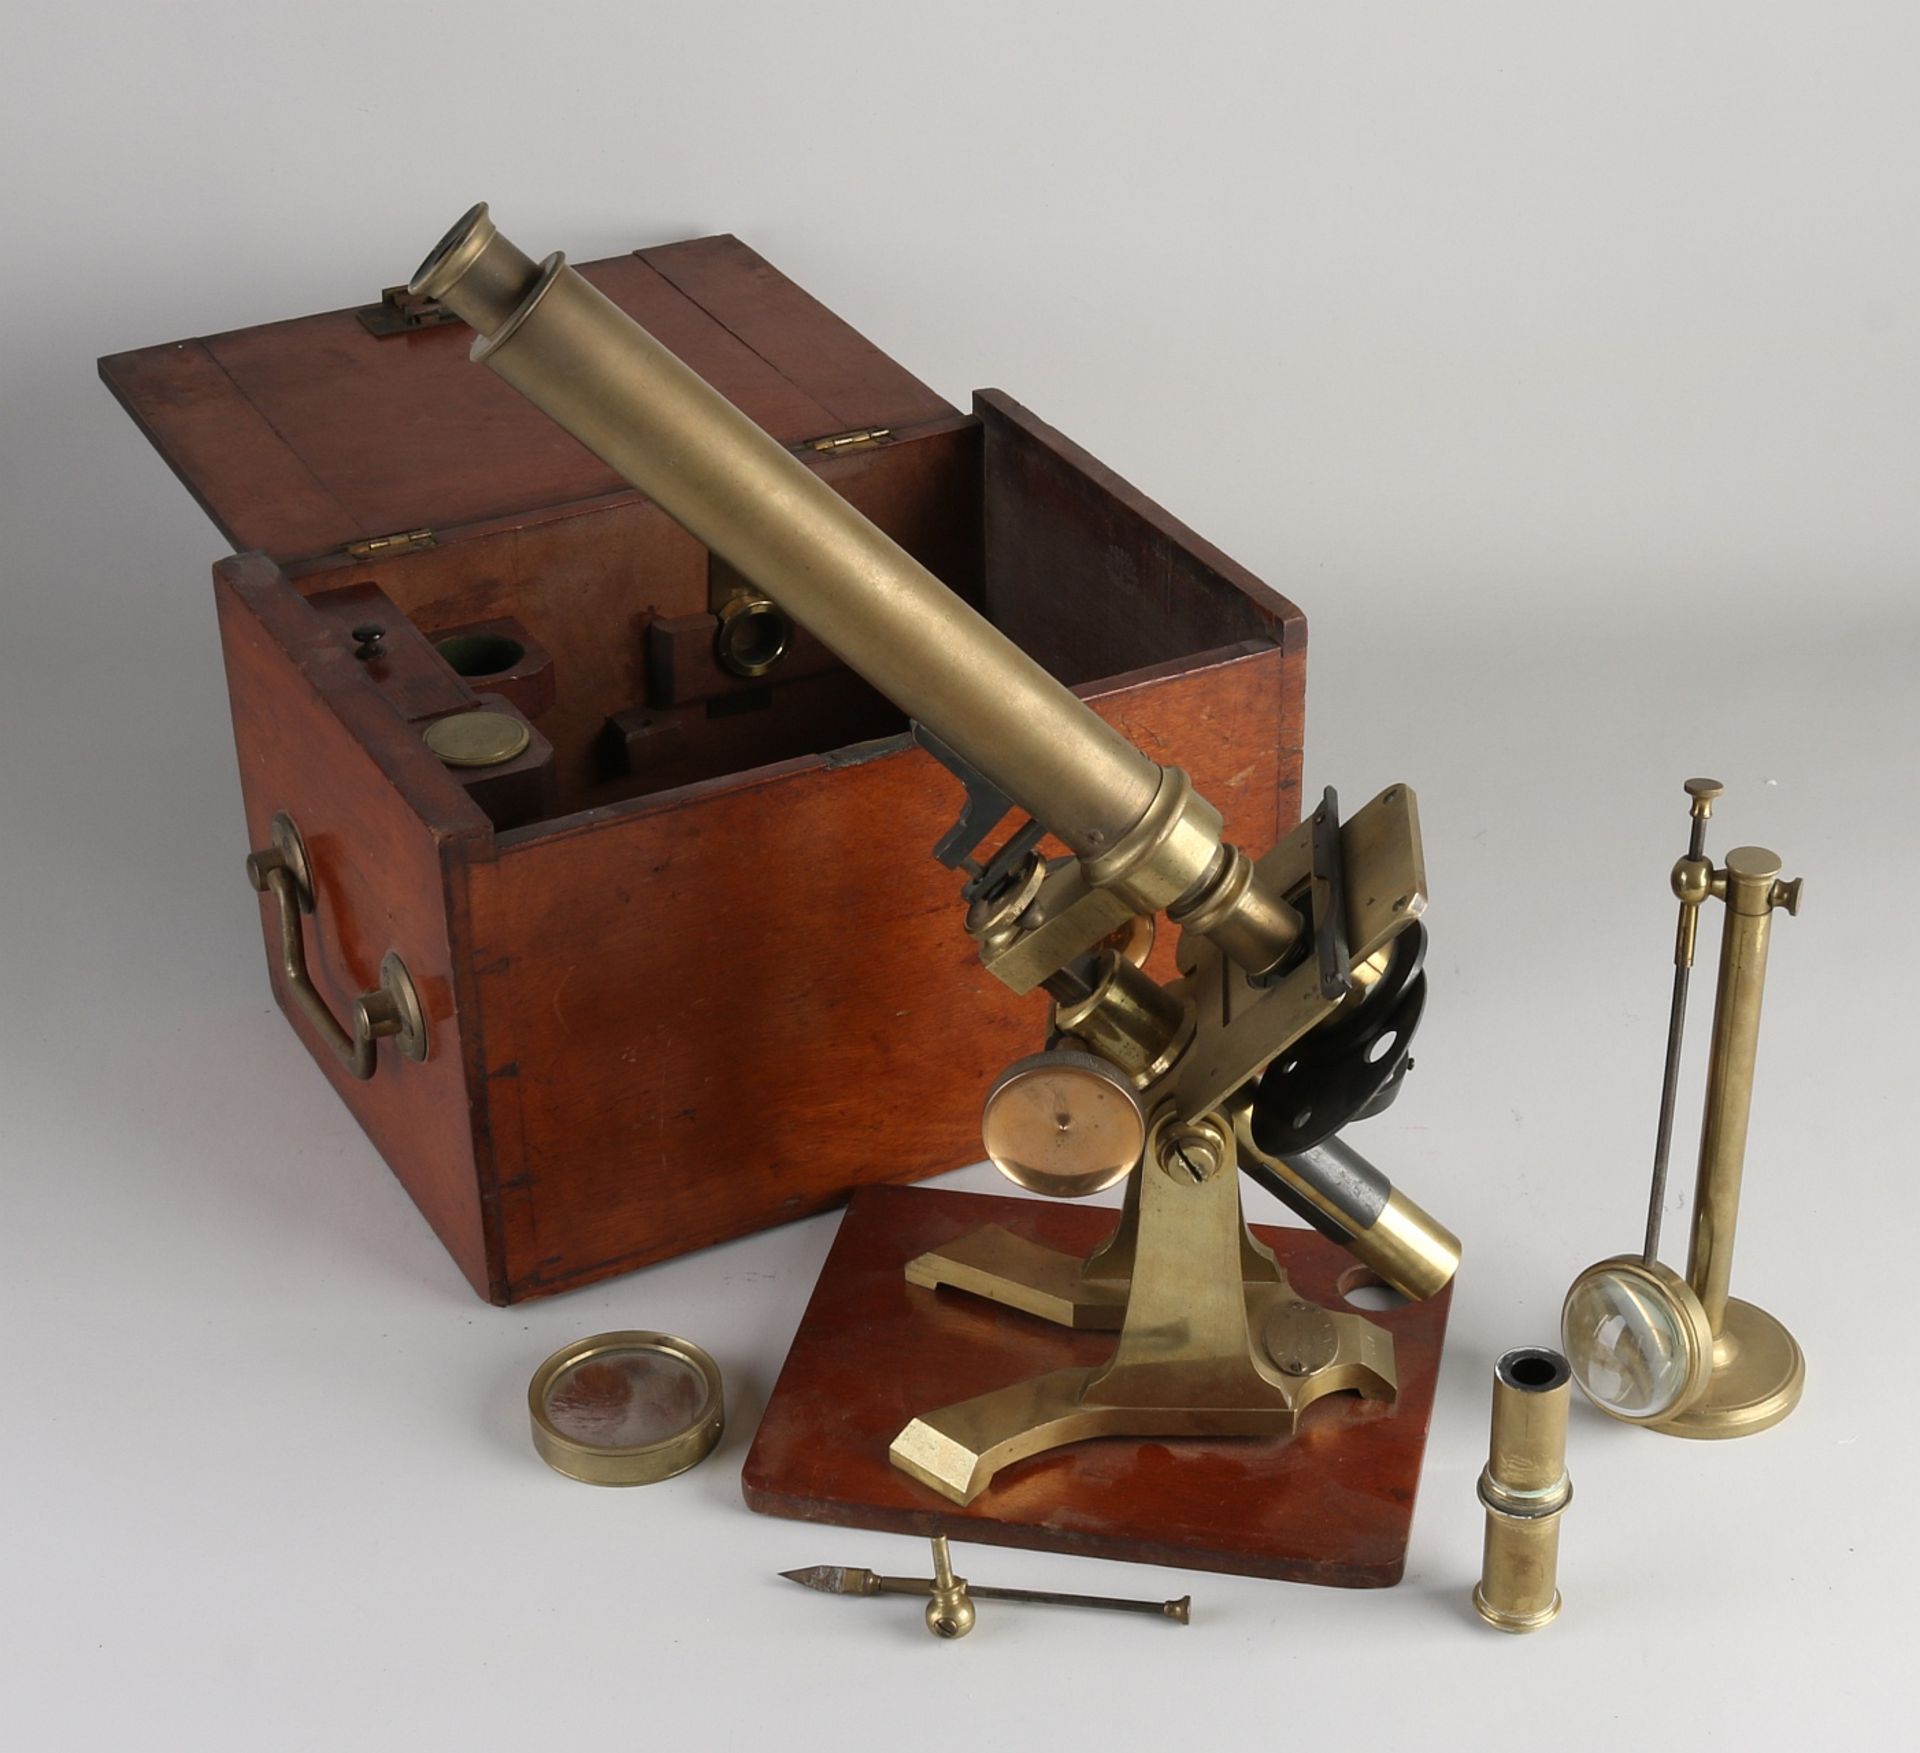 Beautiful antique English microscope